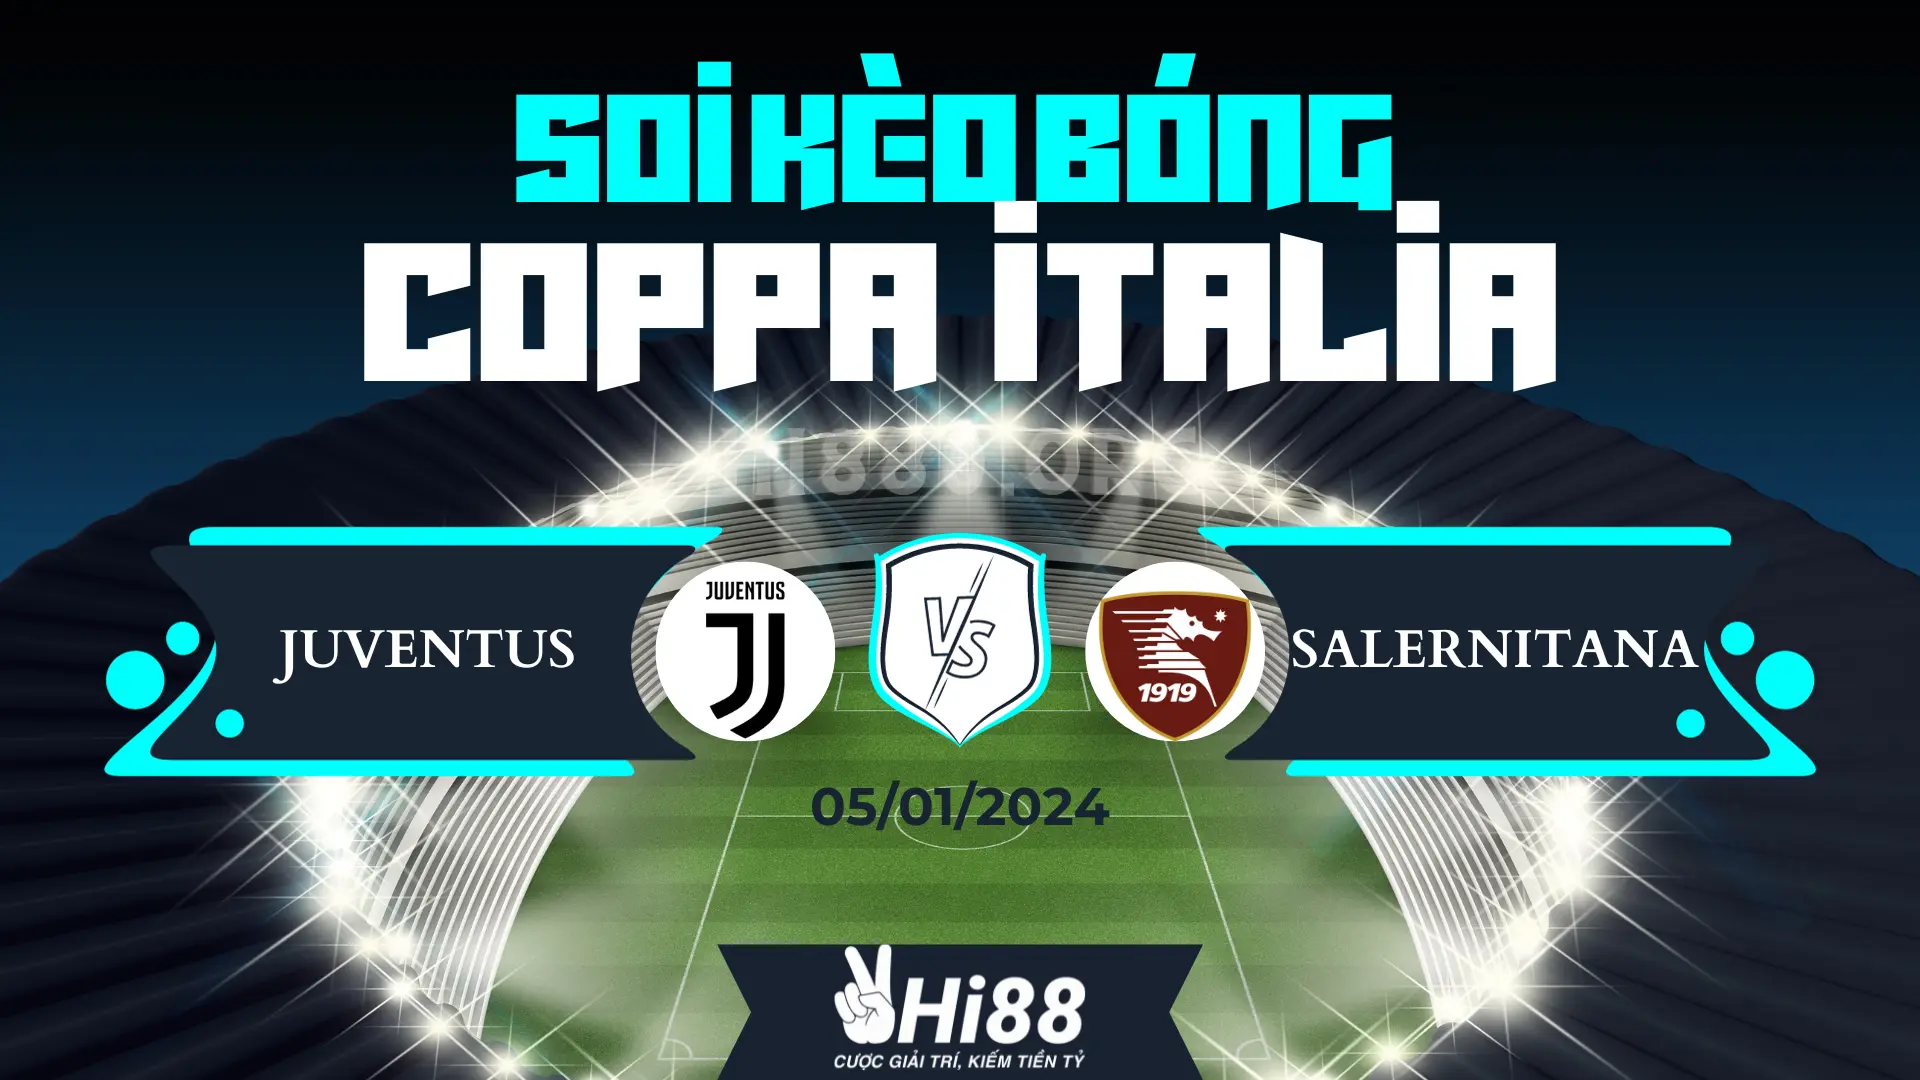 Soi kèo Juventus vs Salernitana 05/01/2024 COPPA ITALIA